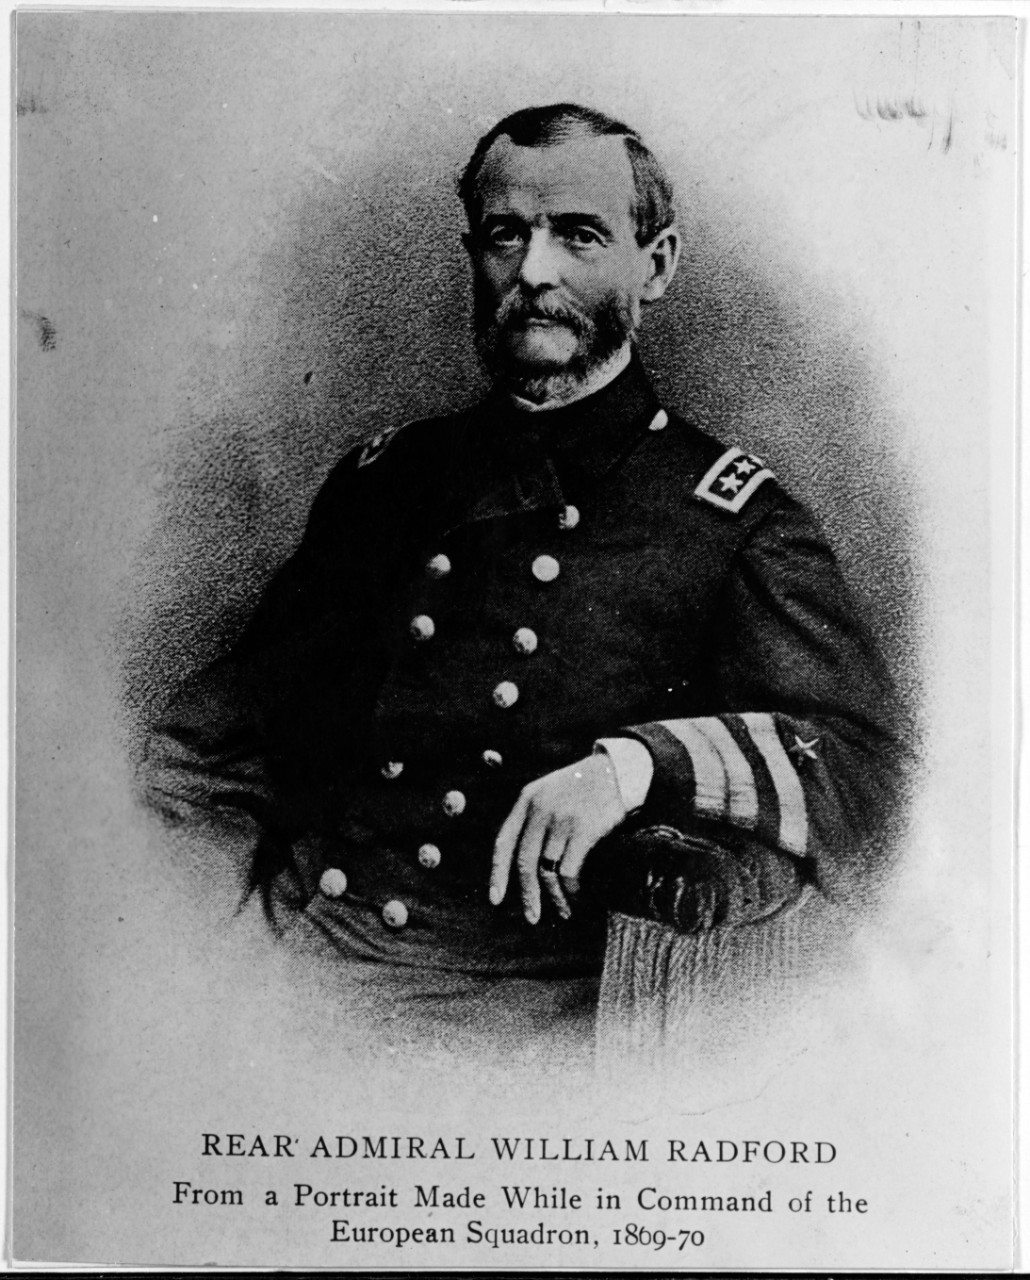 Rear Admiral William Radford, USN